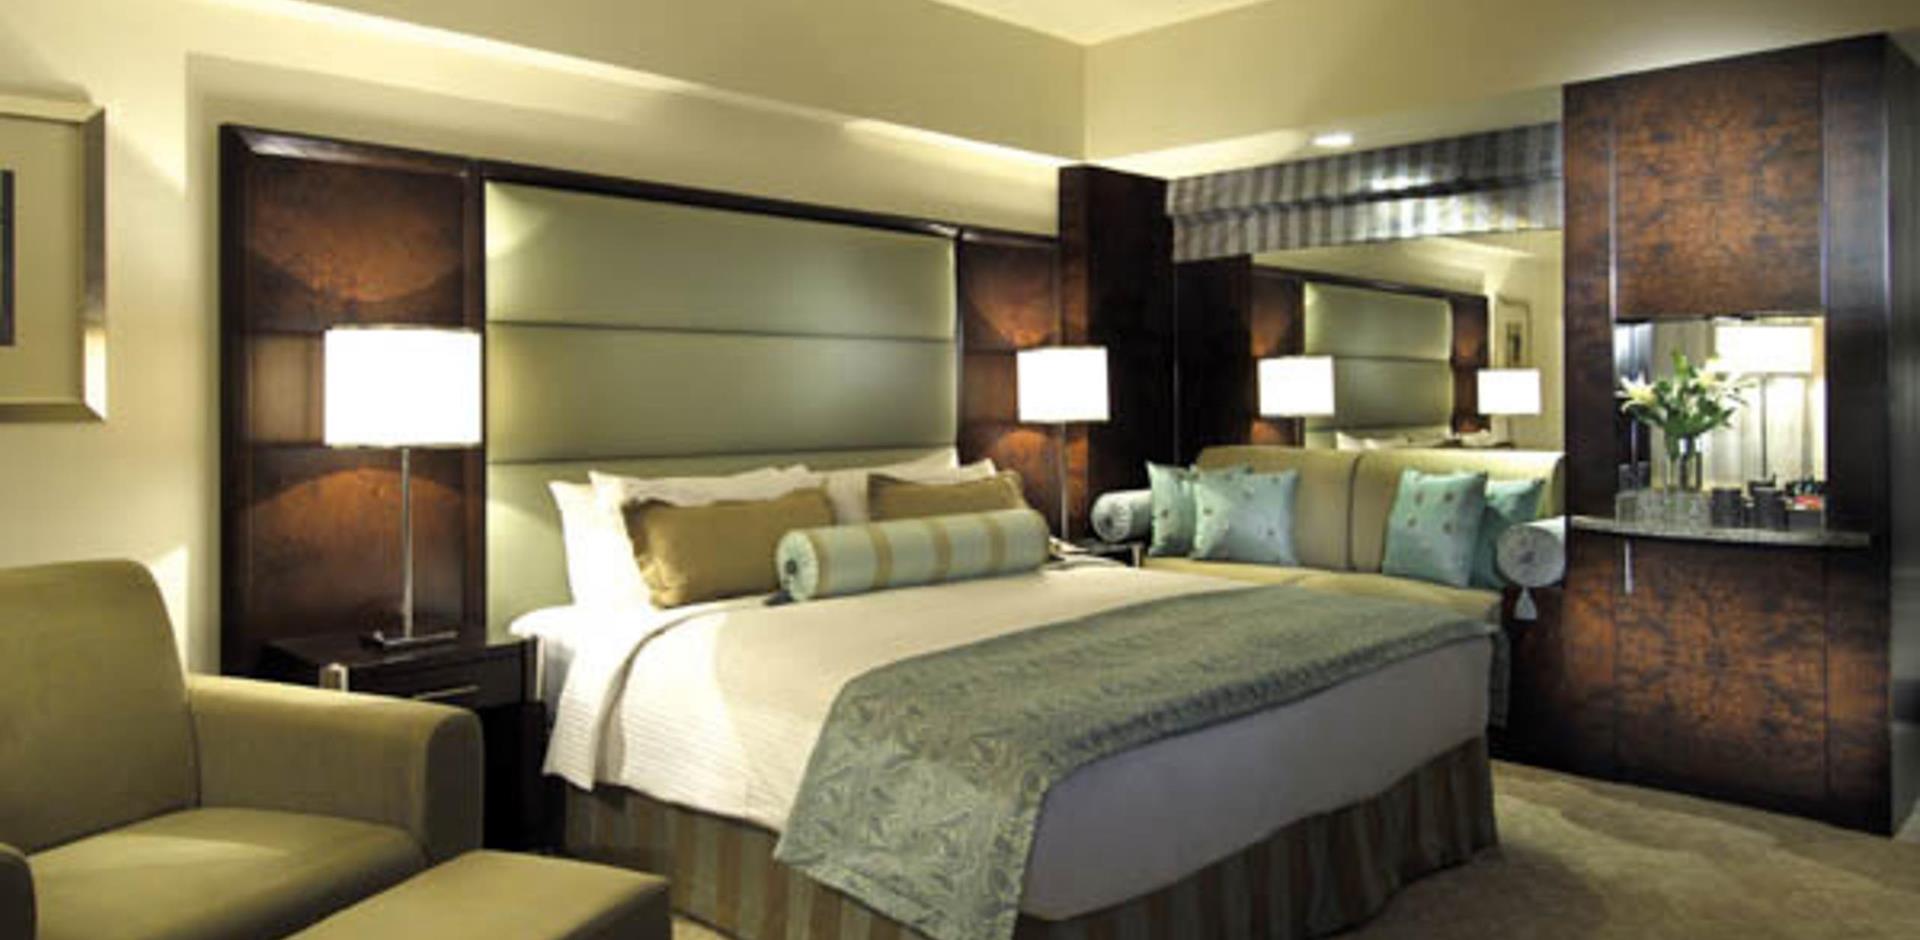 InterContinental Abu Dhabi King Bedroom